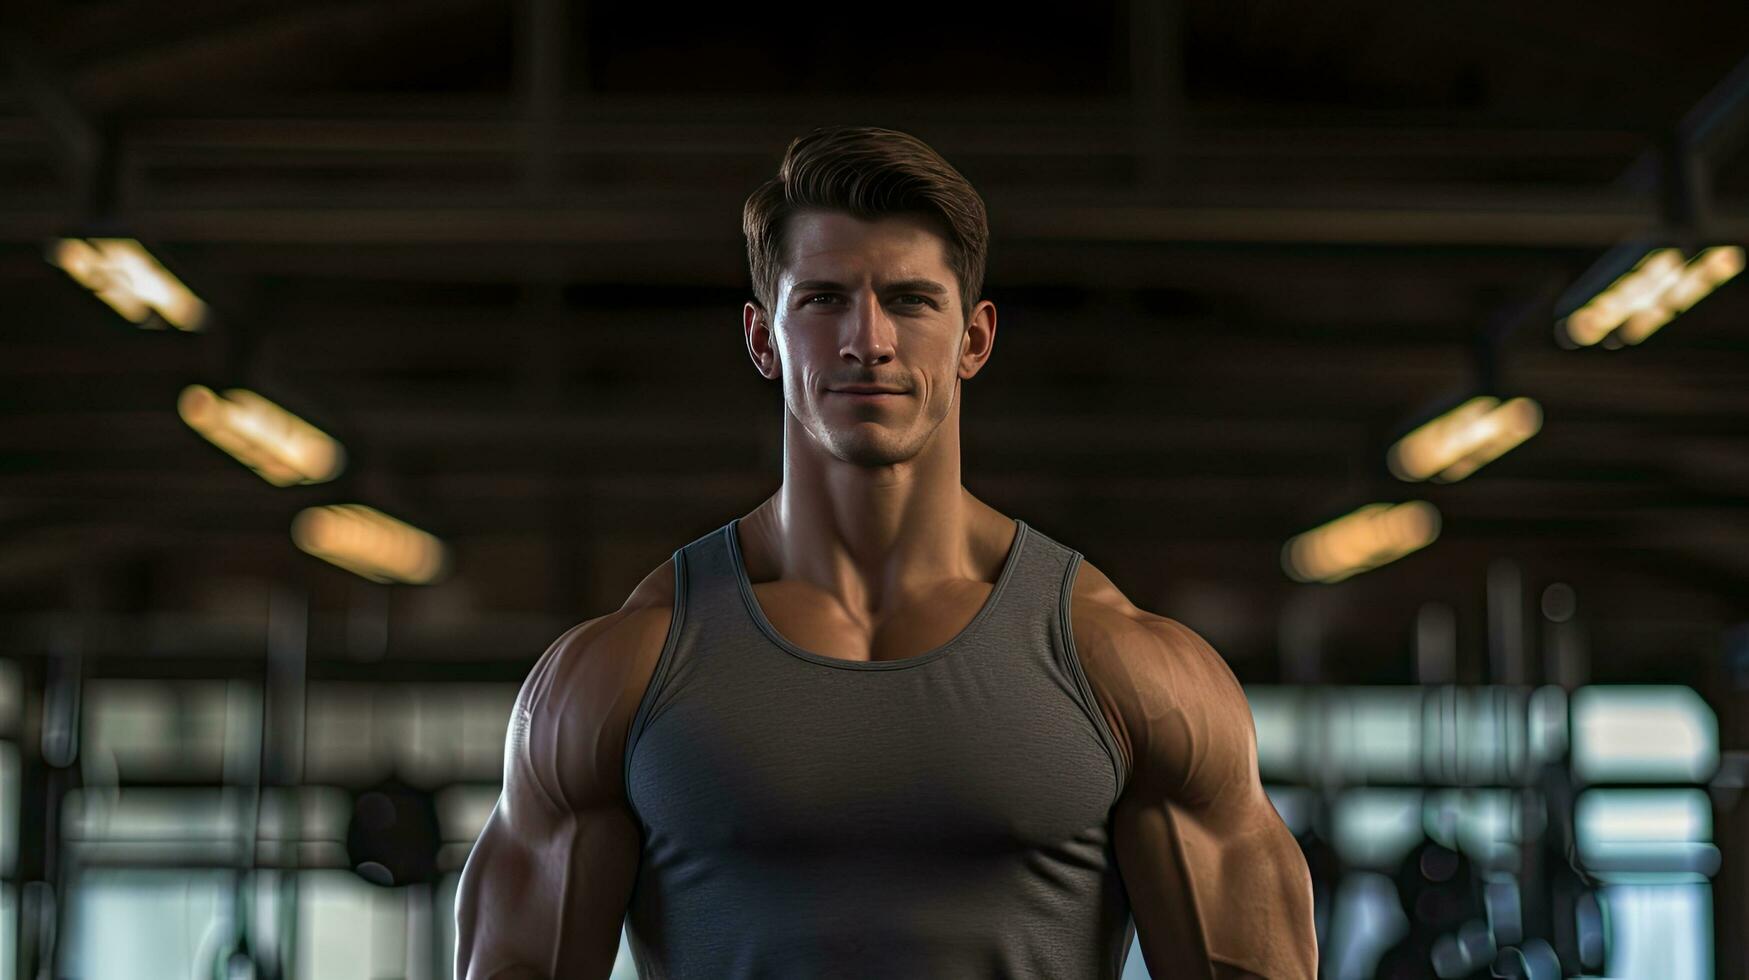 stilig ung man med stark kondition visa av din 6-pack magmuskler i de Gym. foto